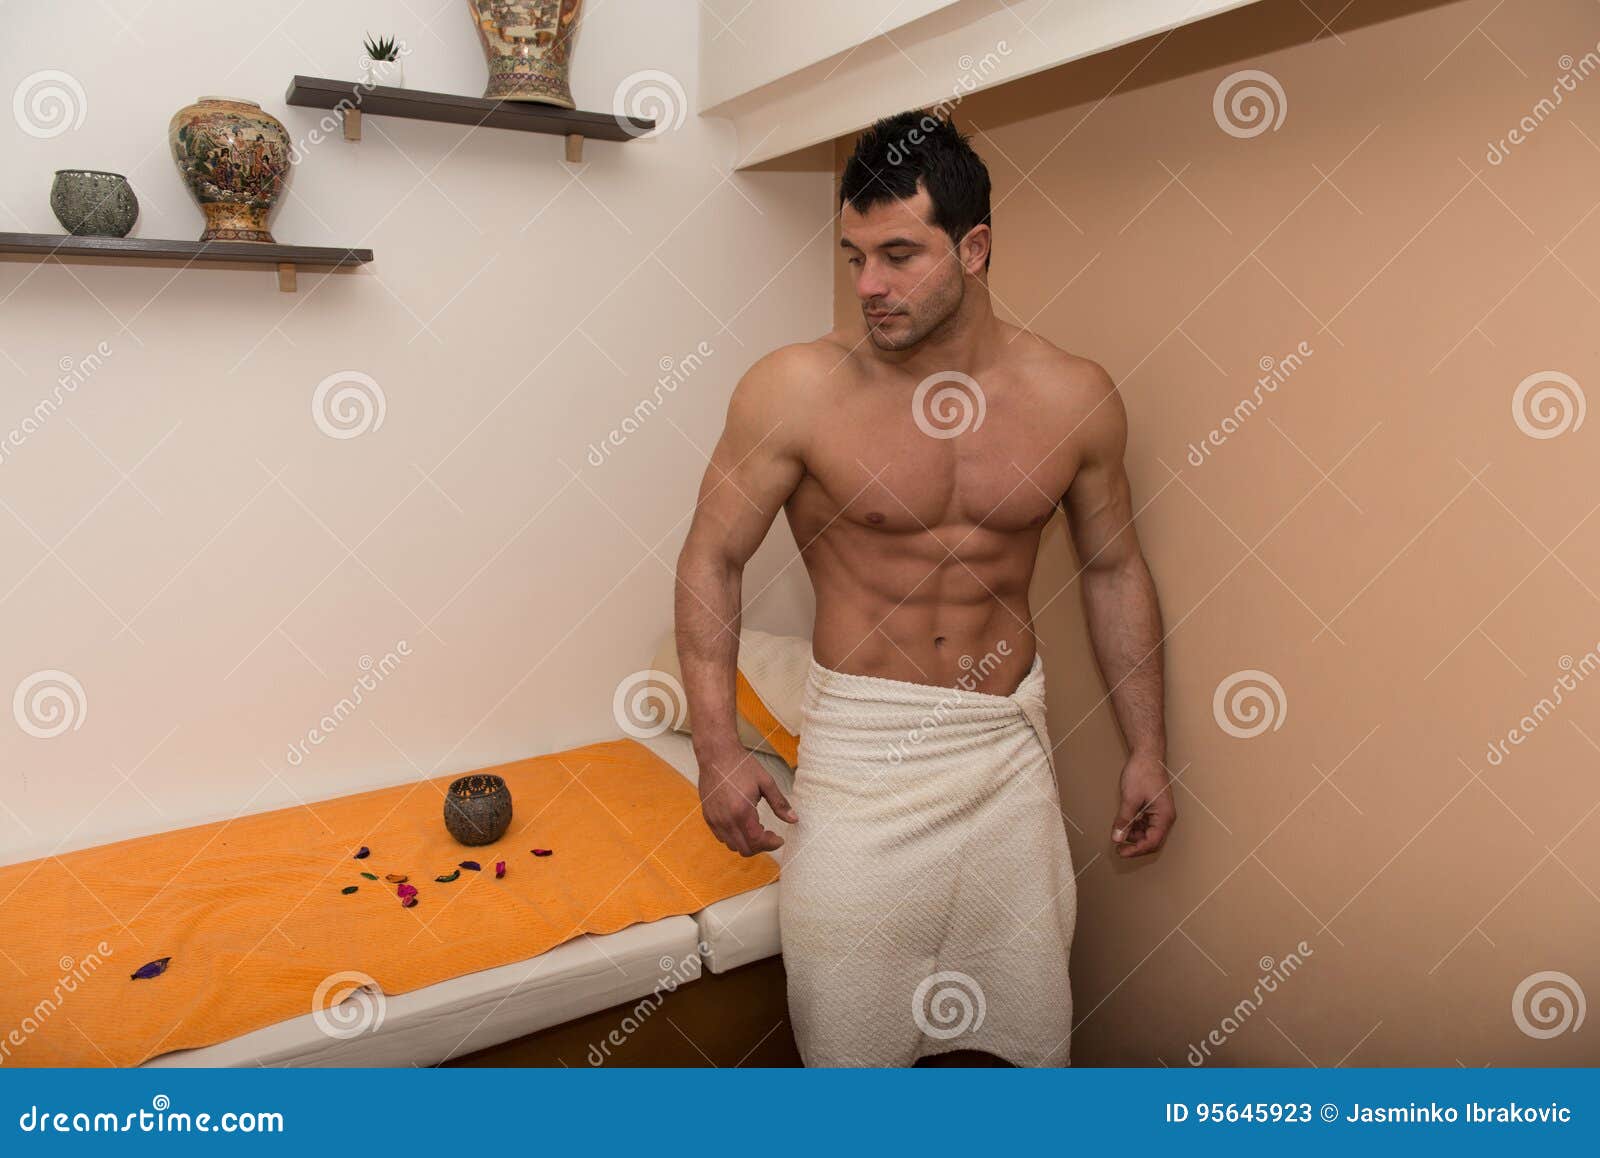 Patois servet Spektakel Portrait of a Fit Man in Massage Room Stock Image - Image of luxury,  cheerful: 95645923